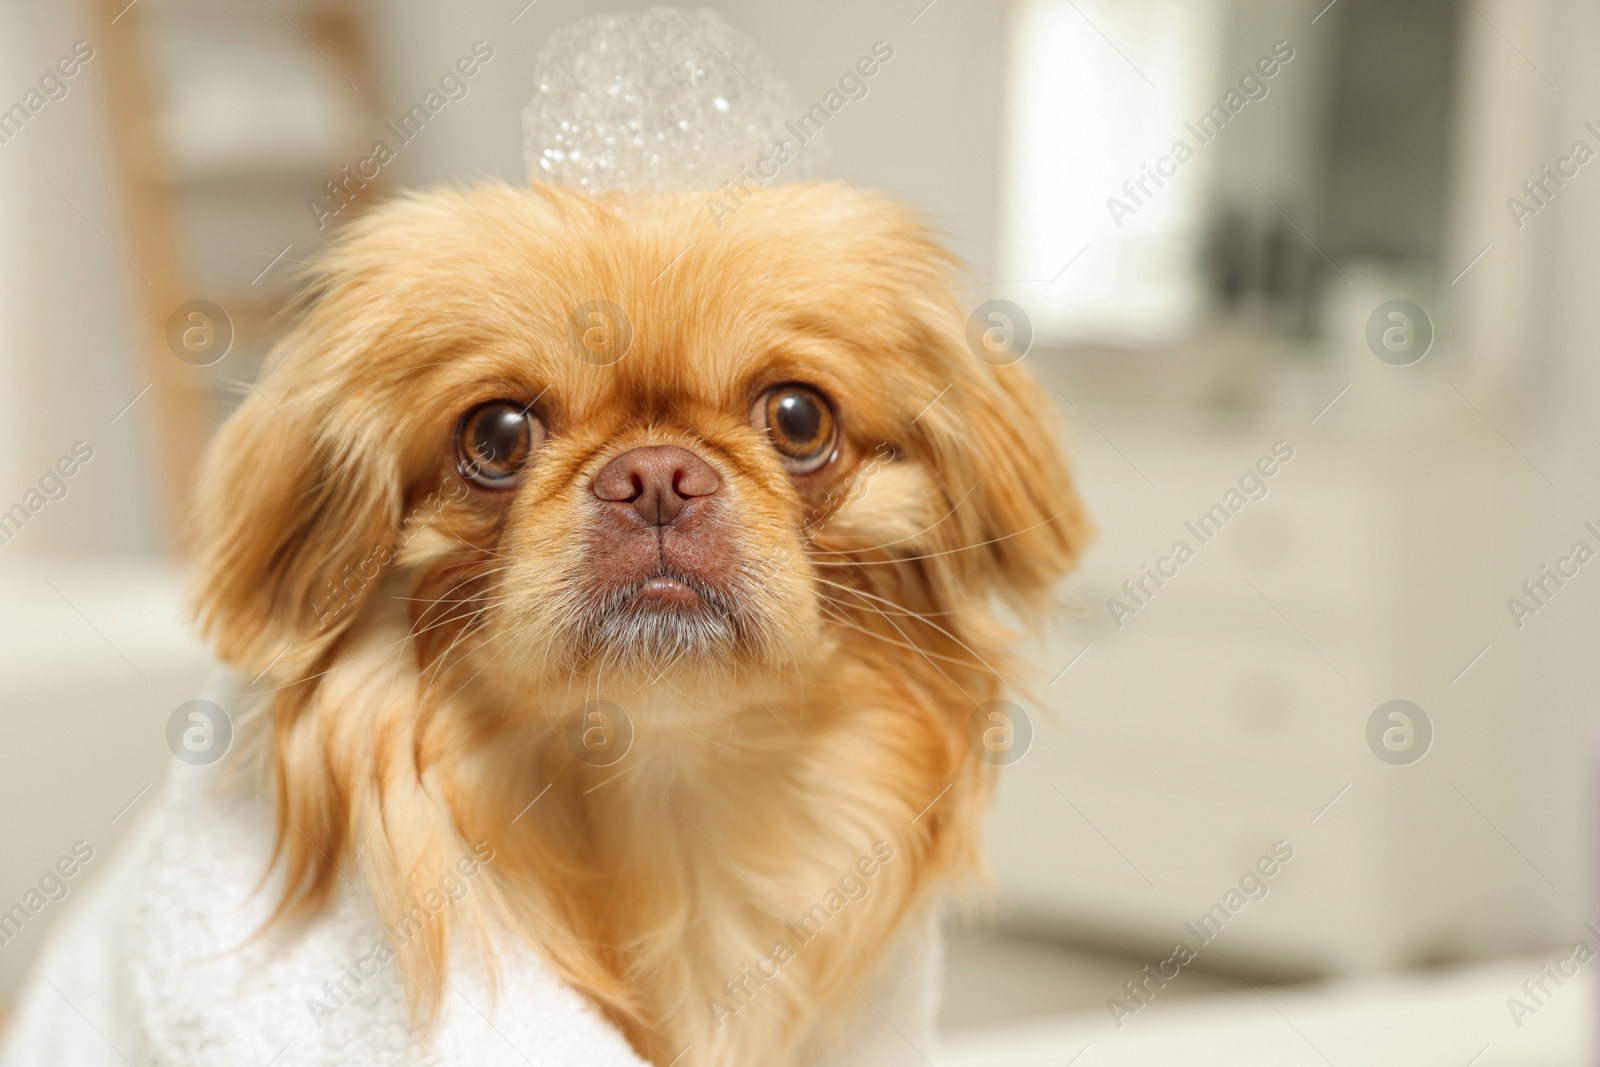 Photo of Cute Pekingese dog with towel and shampoo bubbles on head in bathroom. Pet hygiene